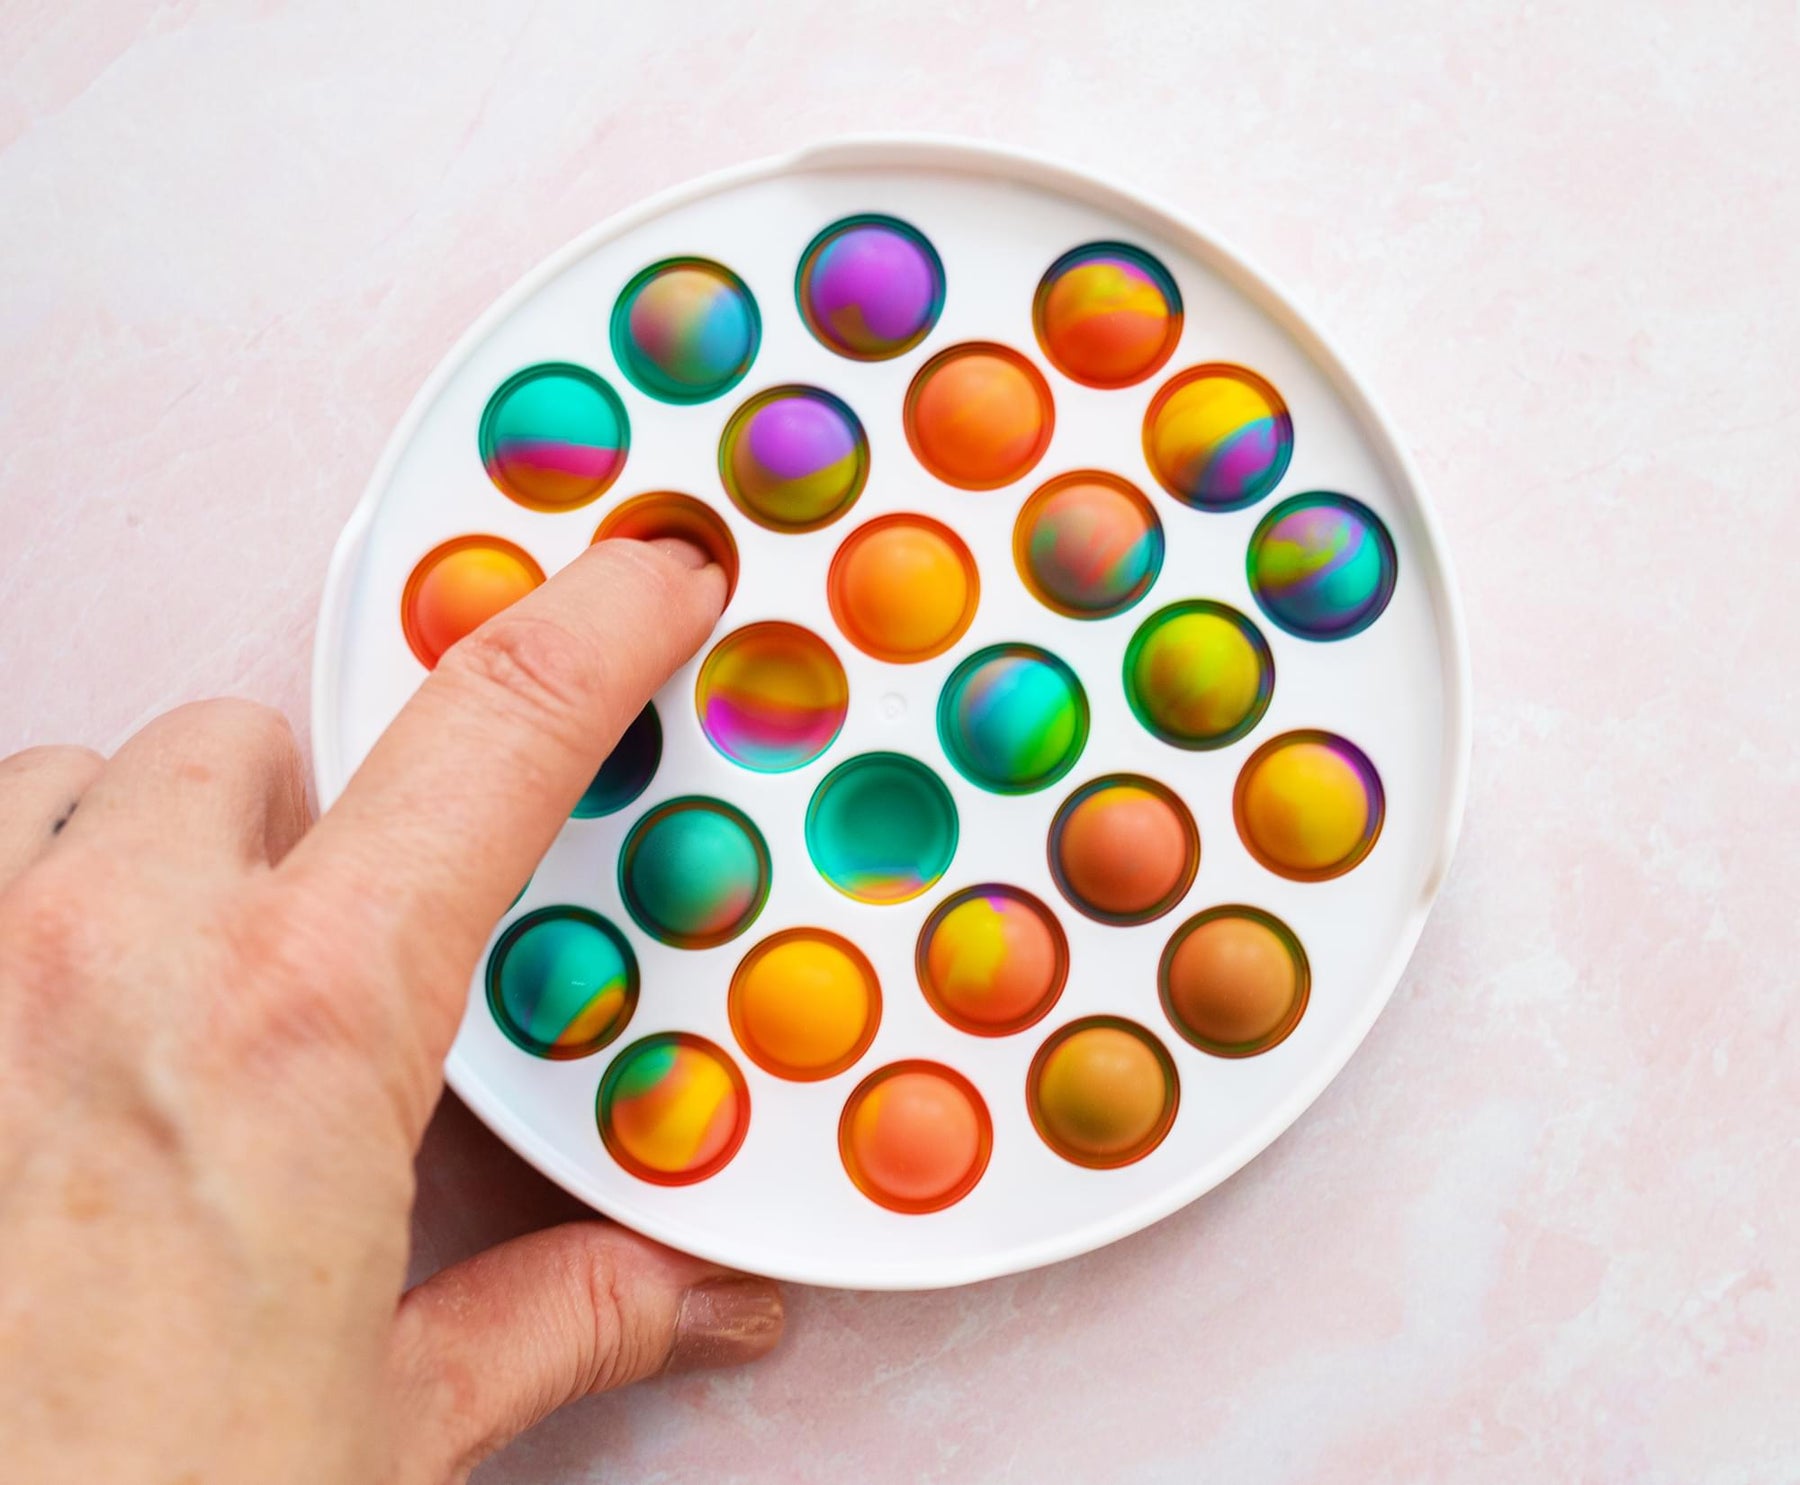 Toynk Pop Fidget Toys Rainbow Bubble Popping Game